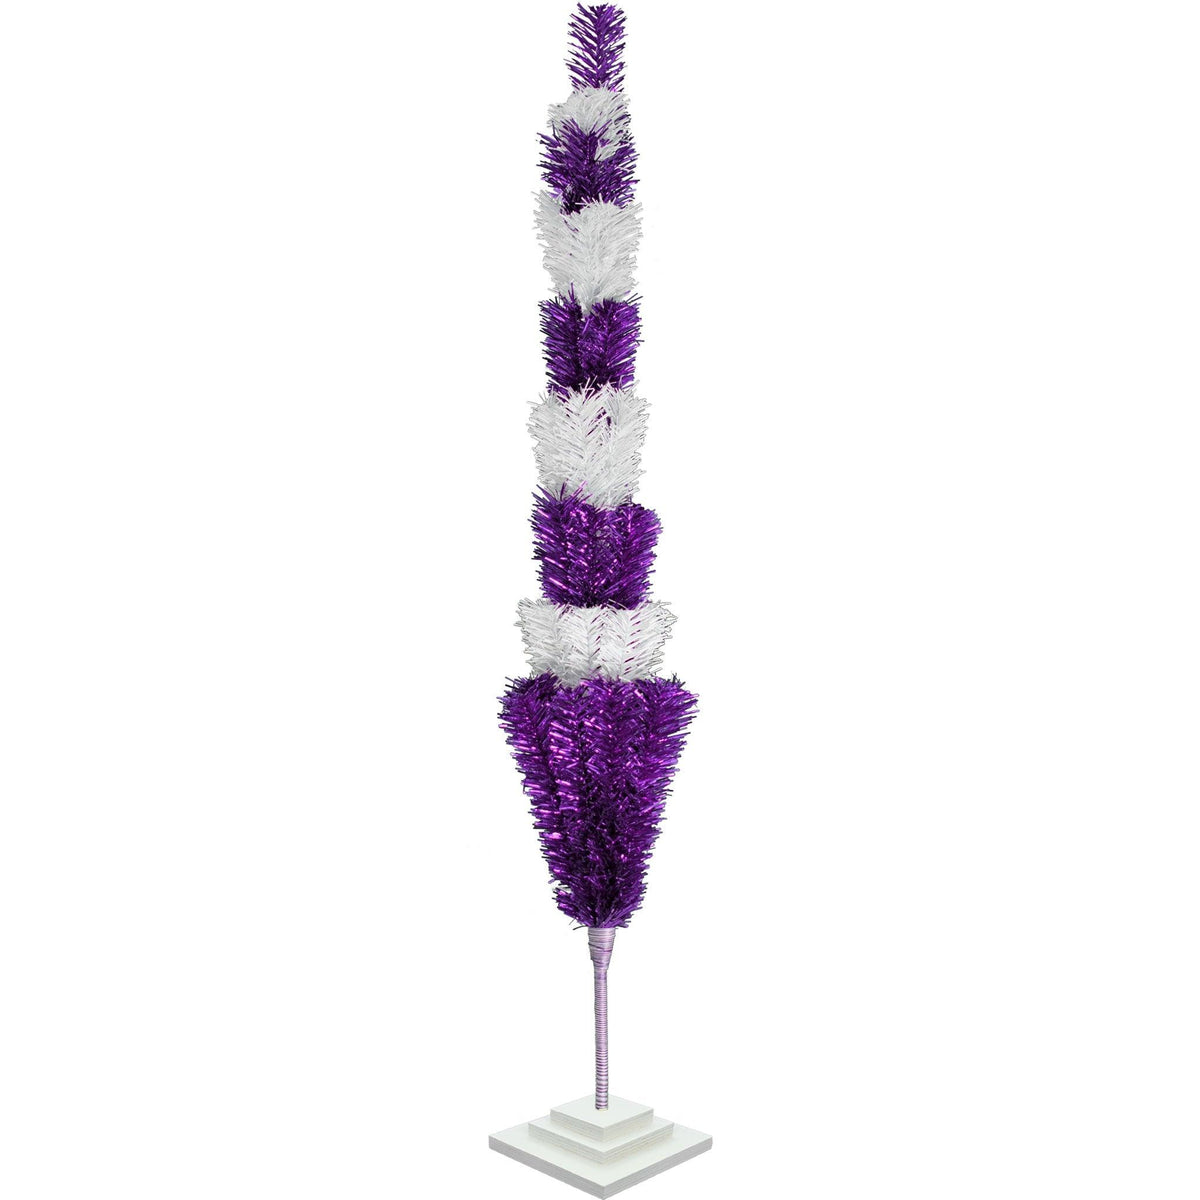 48in Purple & White Layered Tinsel Christmas Trees on sale at leedisplay.com